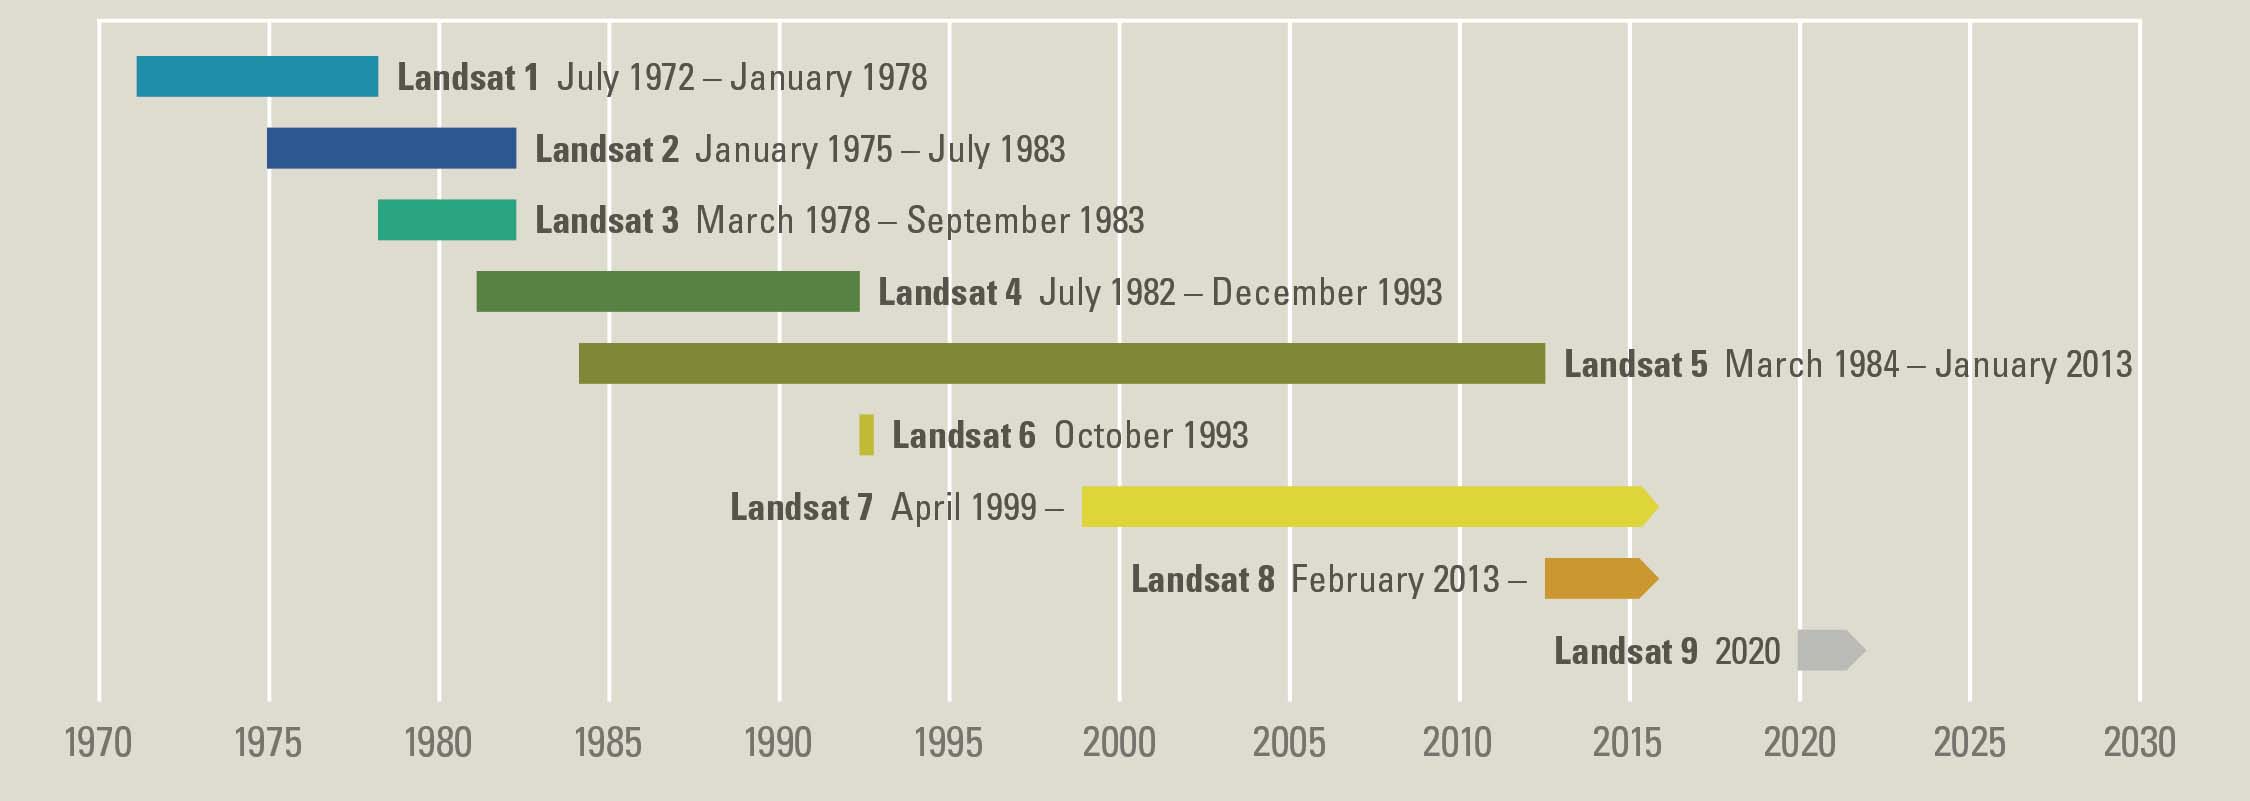 Landsat History